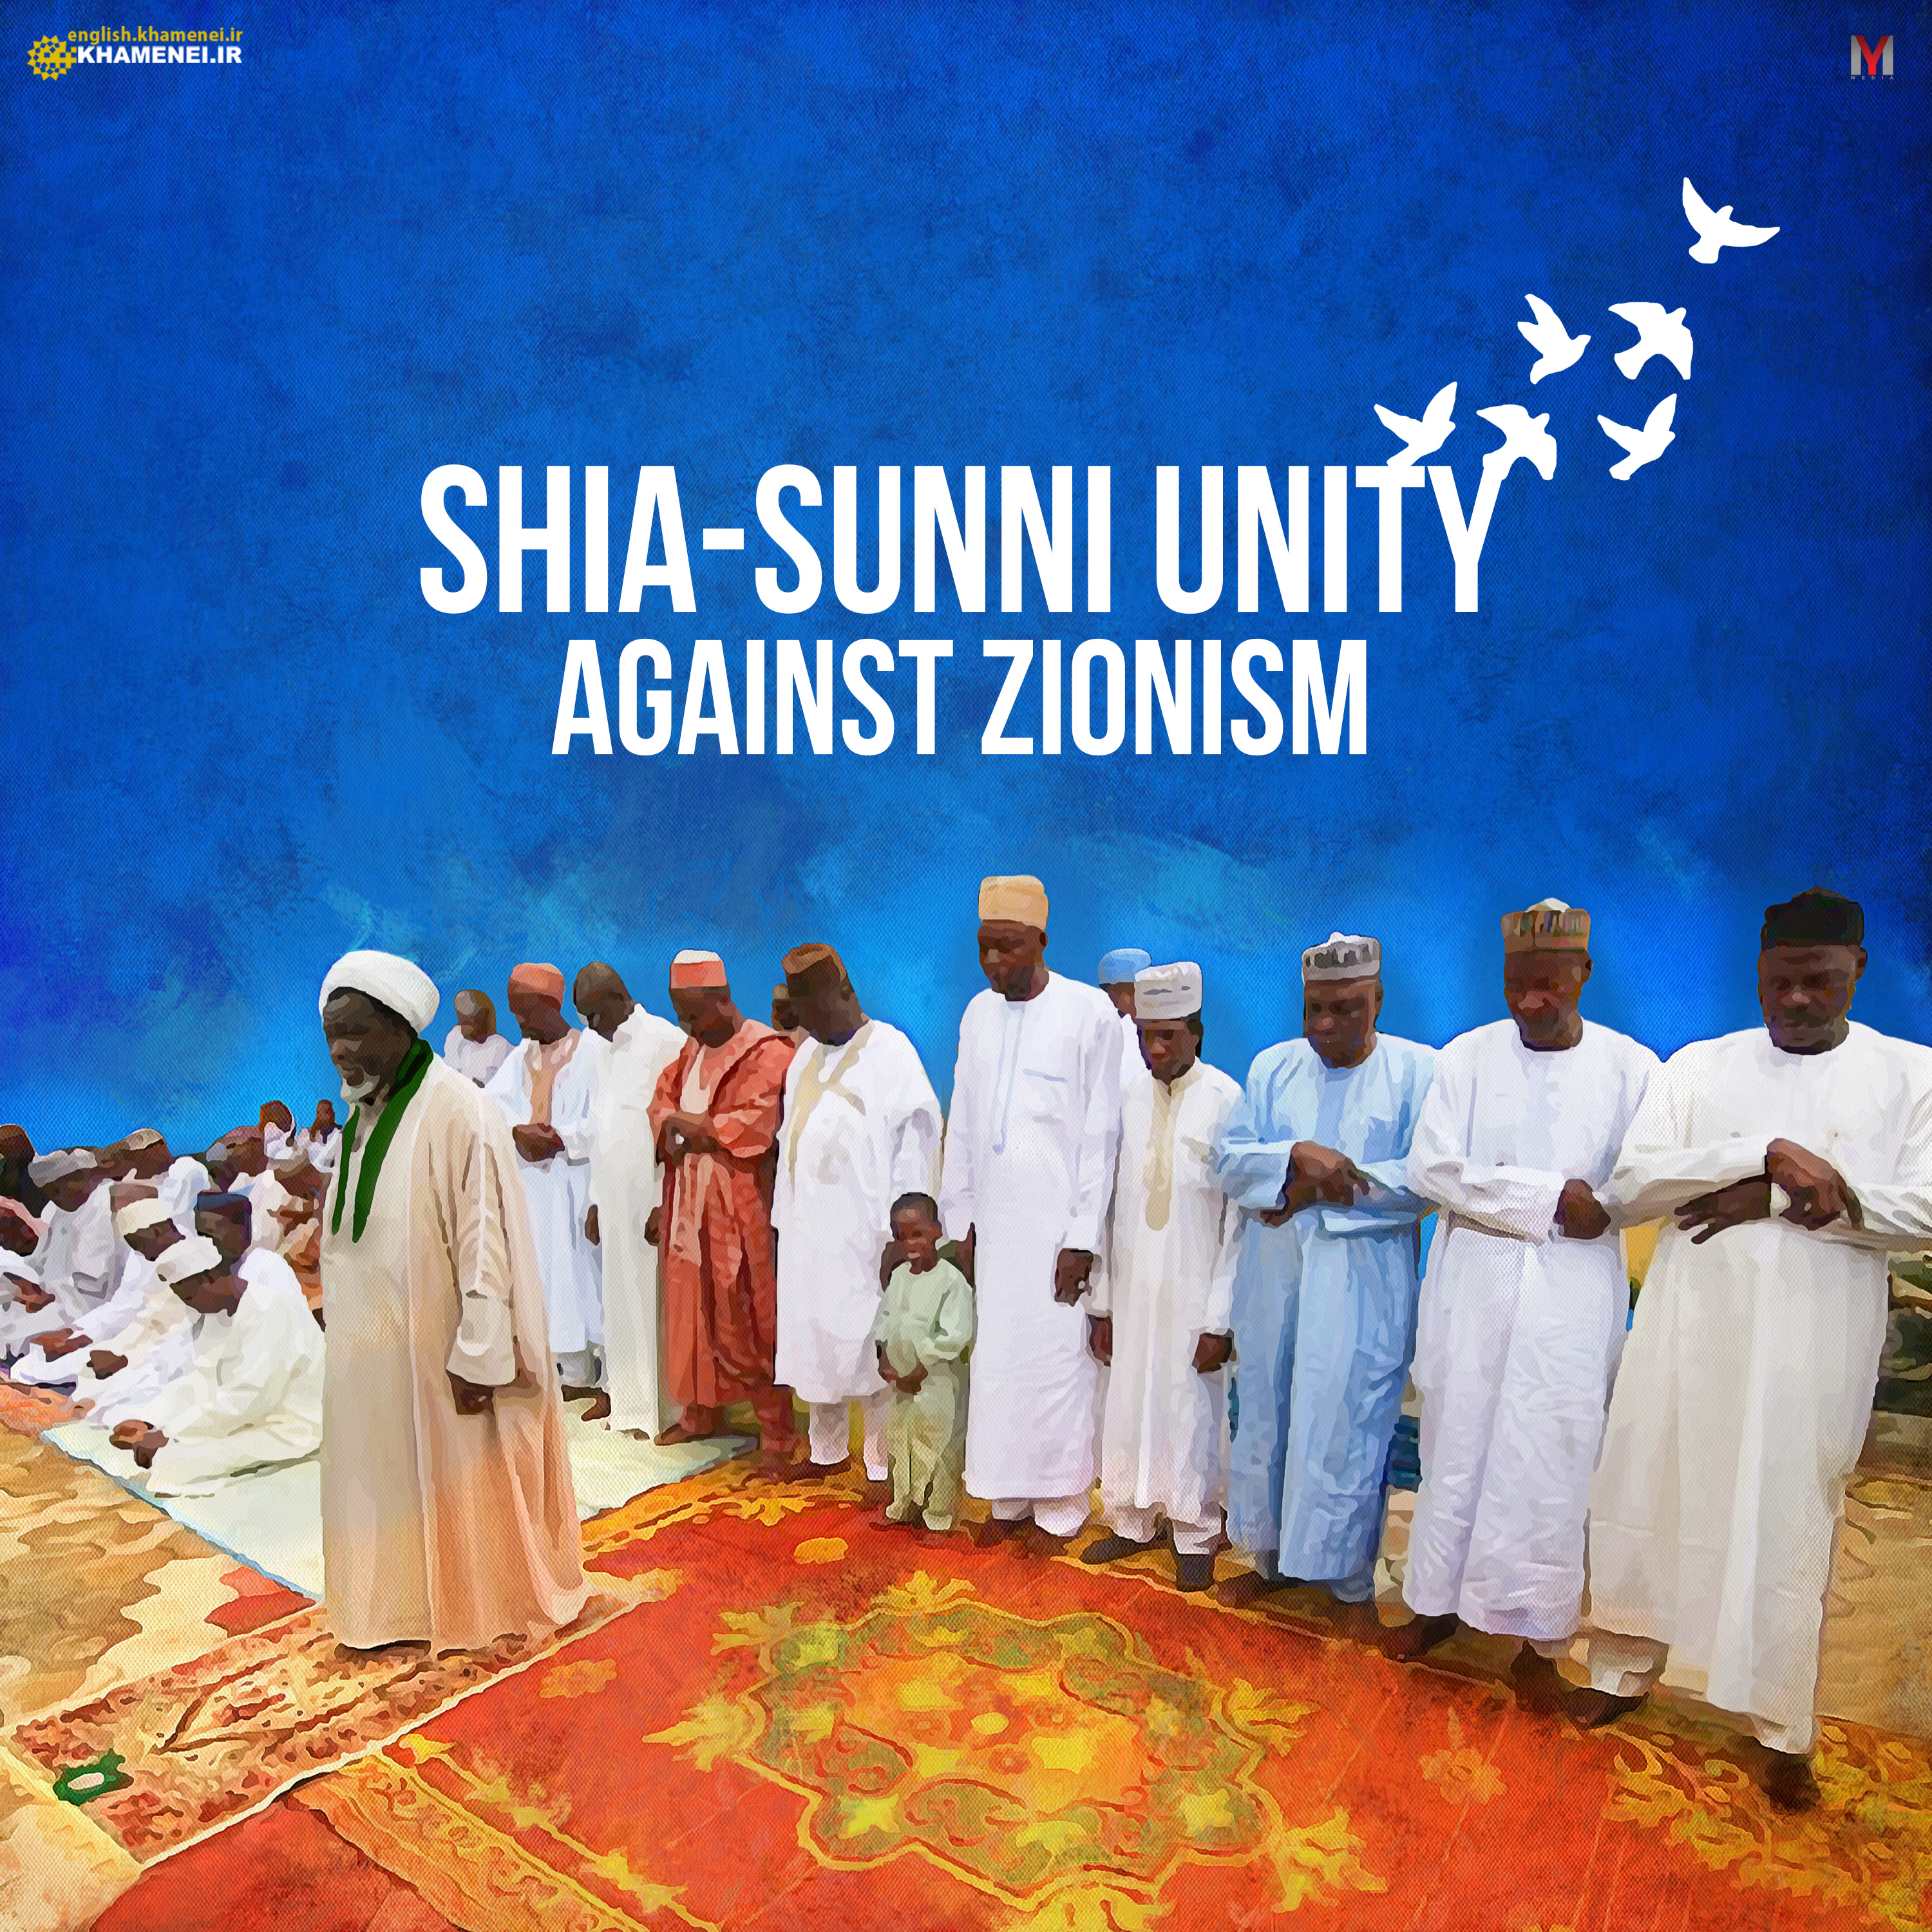 shia sunni unity week, birth of prophet muhammad and imam sadiq - zakzaky - nigeria - zaria